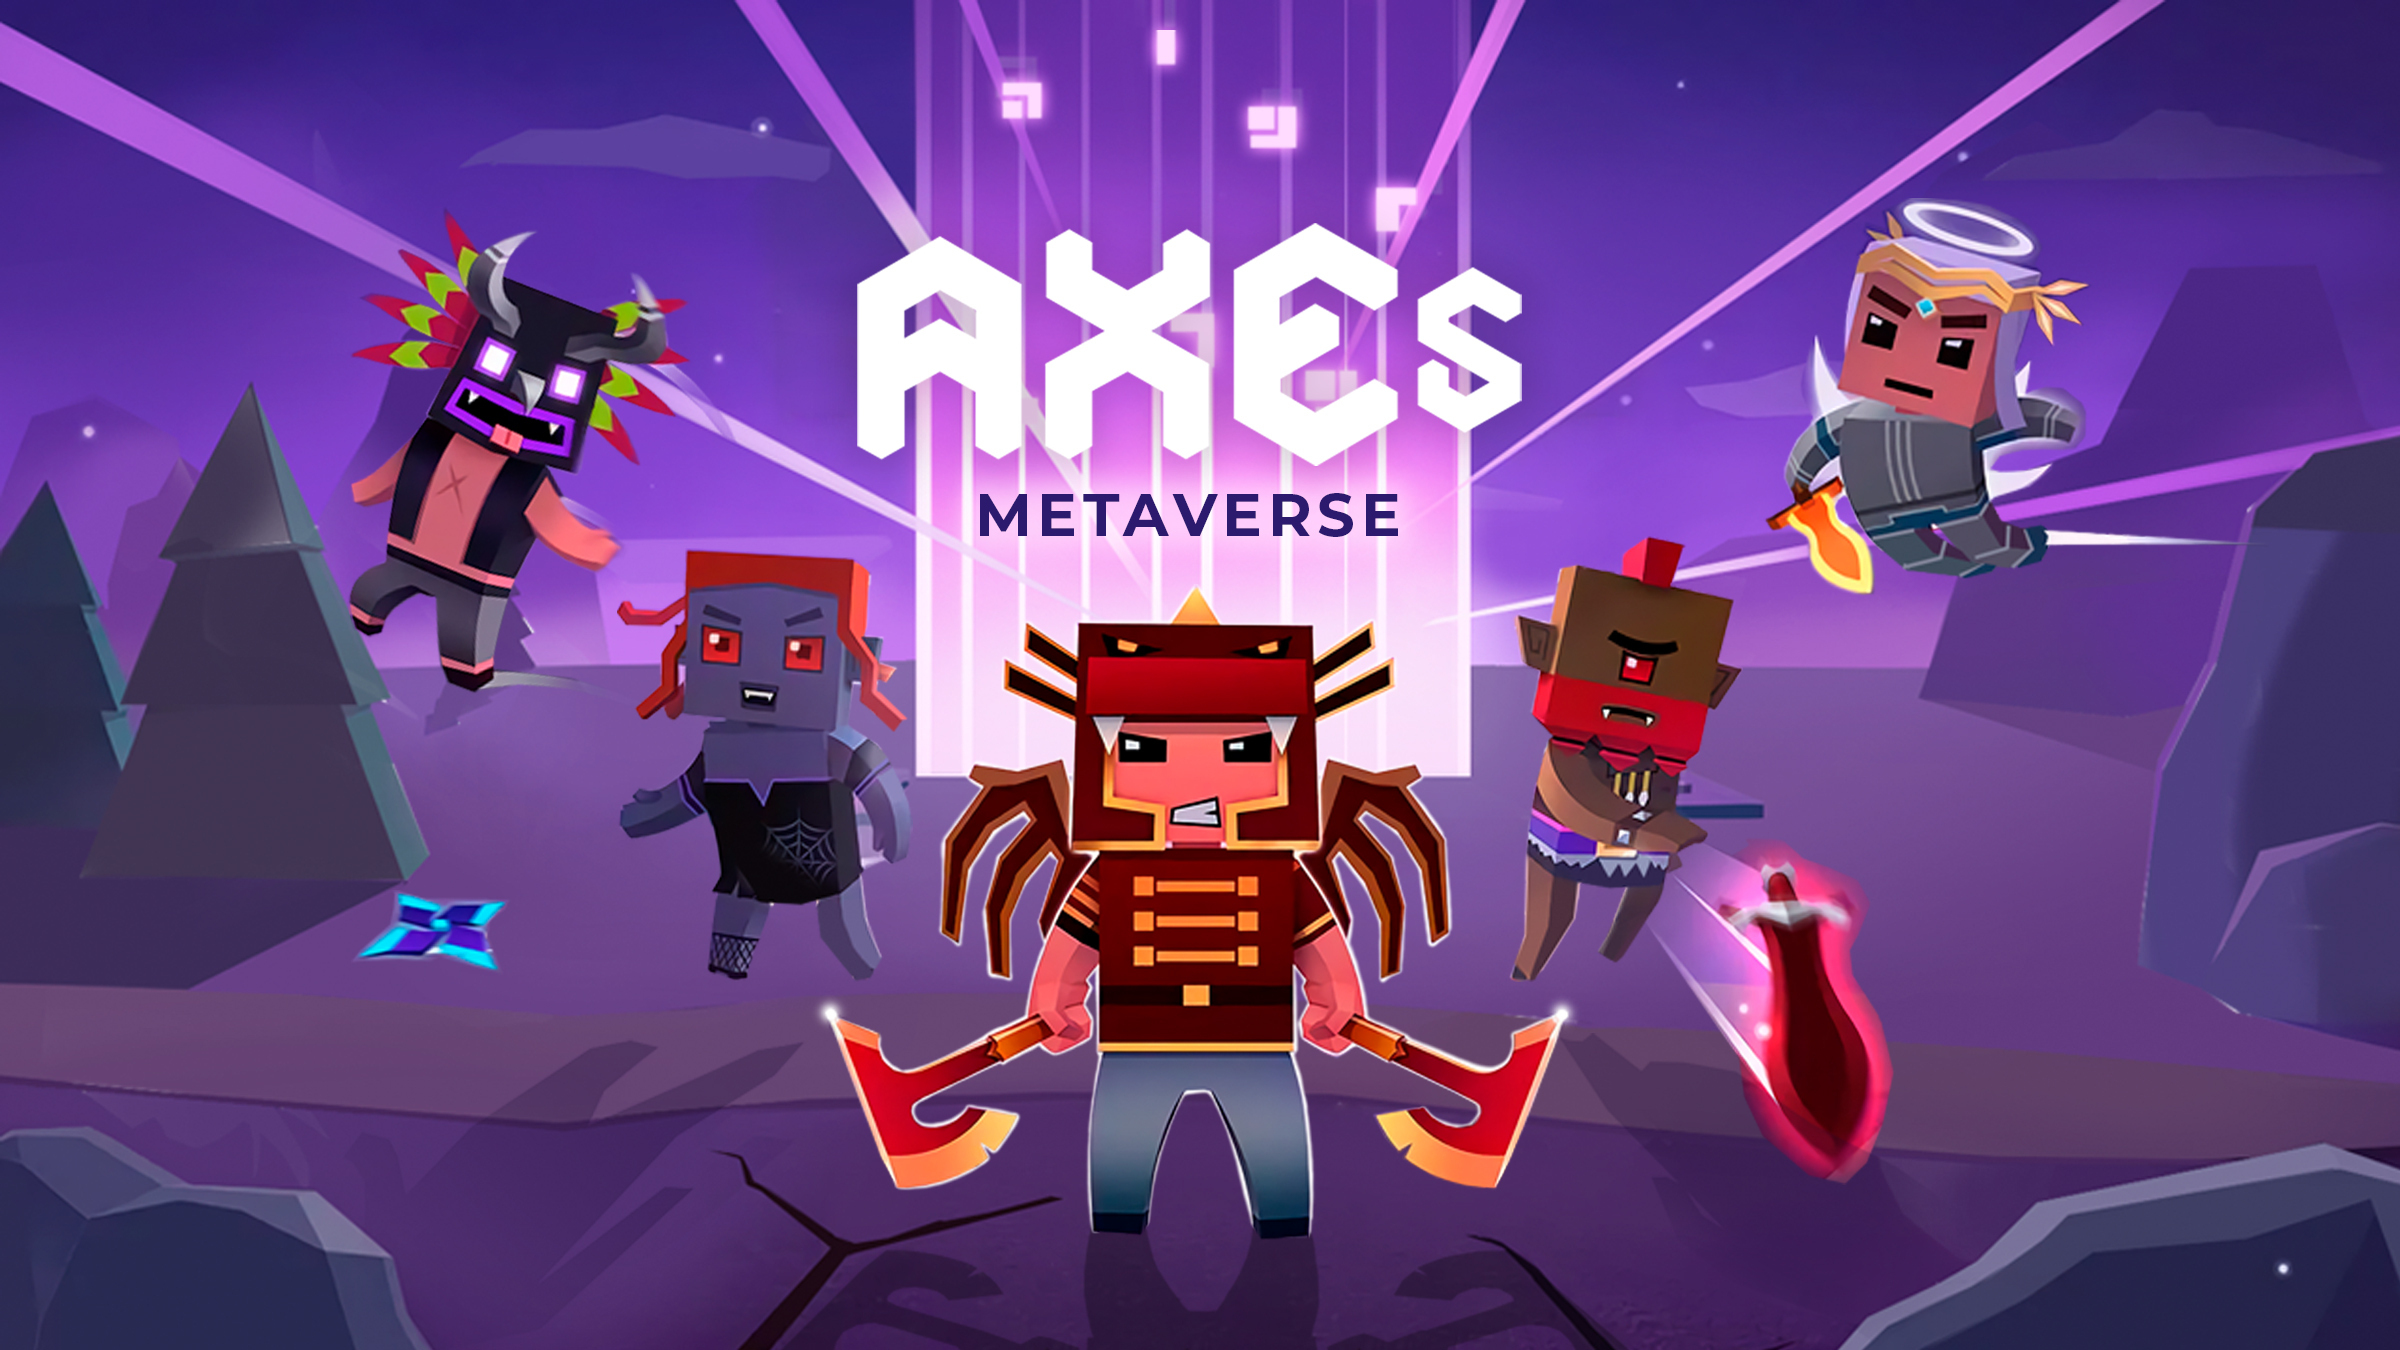 Azur Games investiert 2 Millionen US-Dollar in Axes Metaverse Gaming Project mit NFT-Technologie